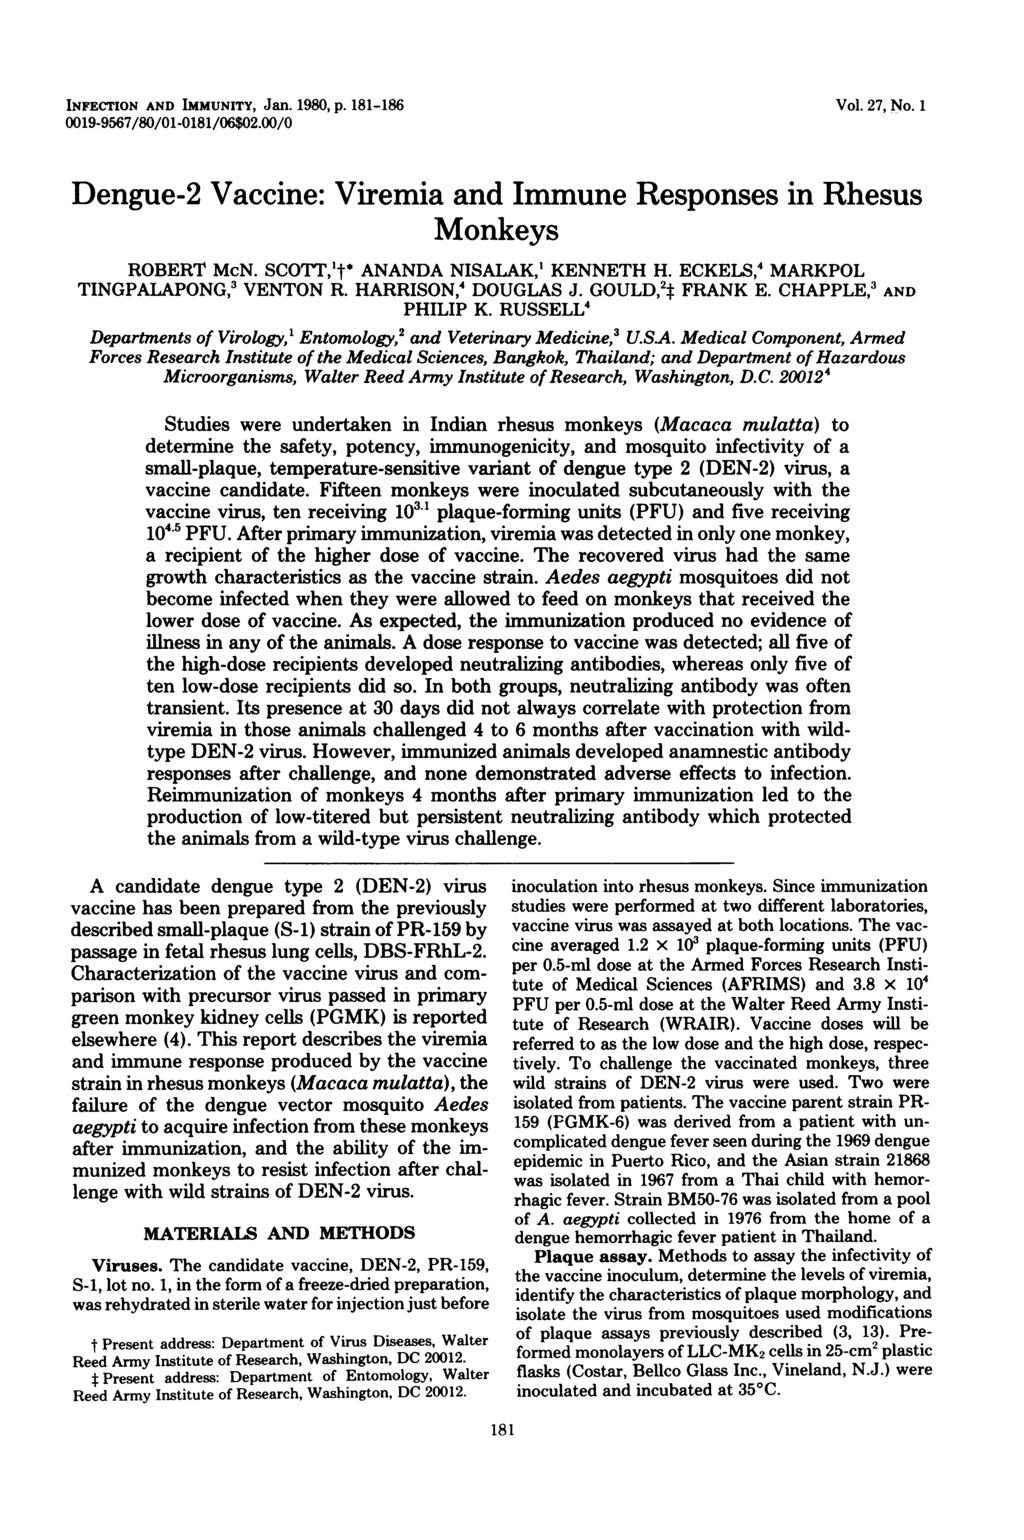 INFECTION AND IMMUNITY, Jan. 1980, p. 181-186 0019-9567/80/01-0181/06$02.00/0 Vol. 27, No. 1 Dengue-2 Vaccine: Viremia and Immune Responses in Rhesus Monkeys ROBERT McN.